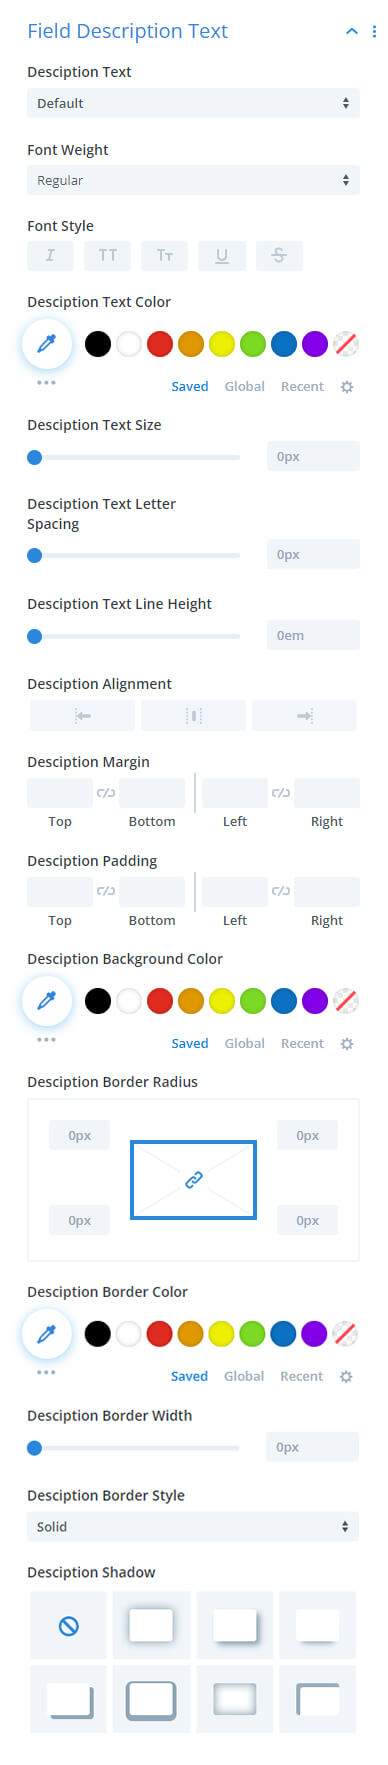 field description text design settings settings in the Divi Contact Form Helper plugin